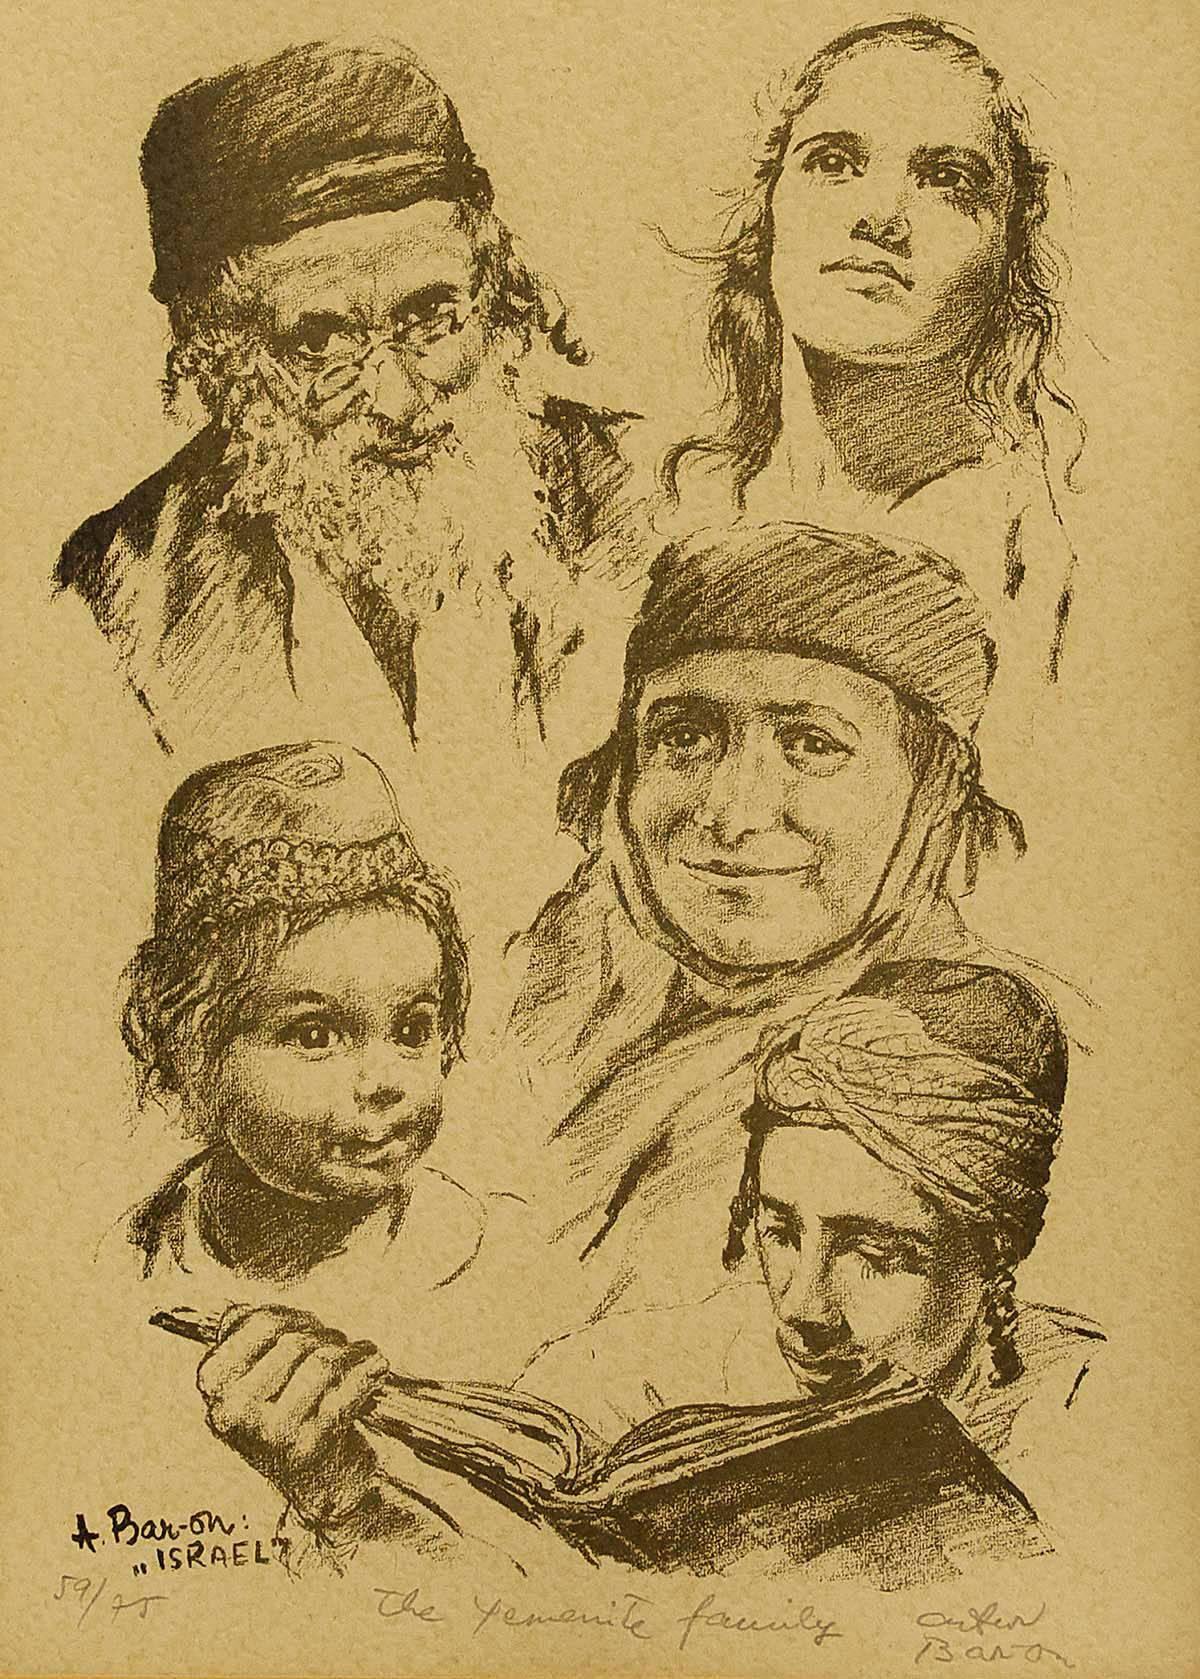 The Yemenite Family, Multi Generational Israeli Family Portrait - Print by Arthur Bar-on